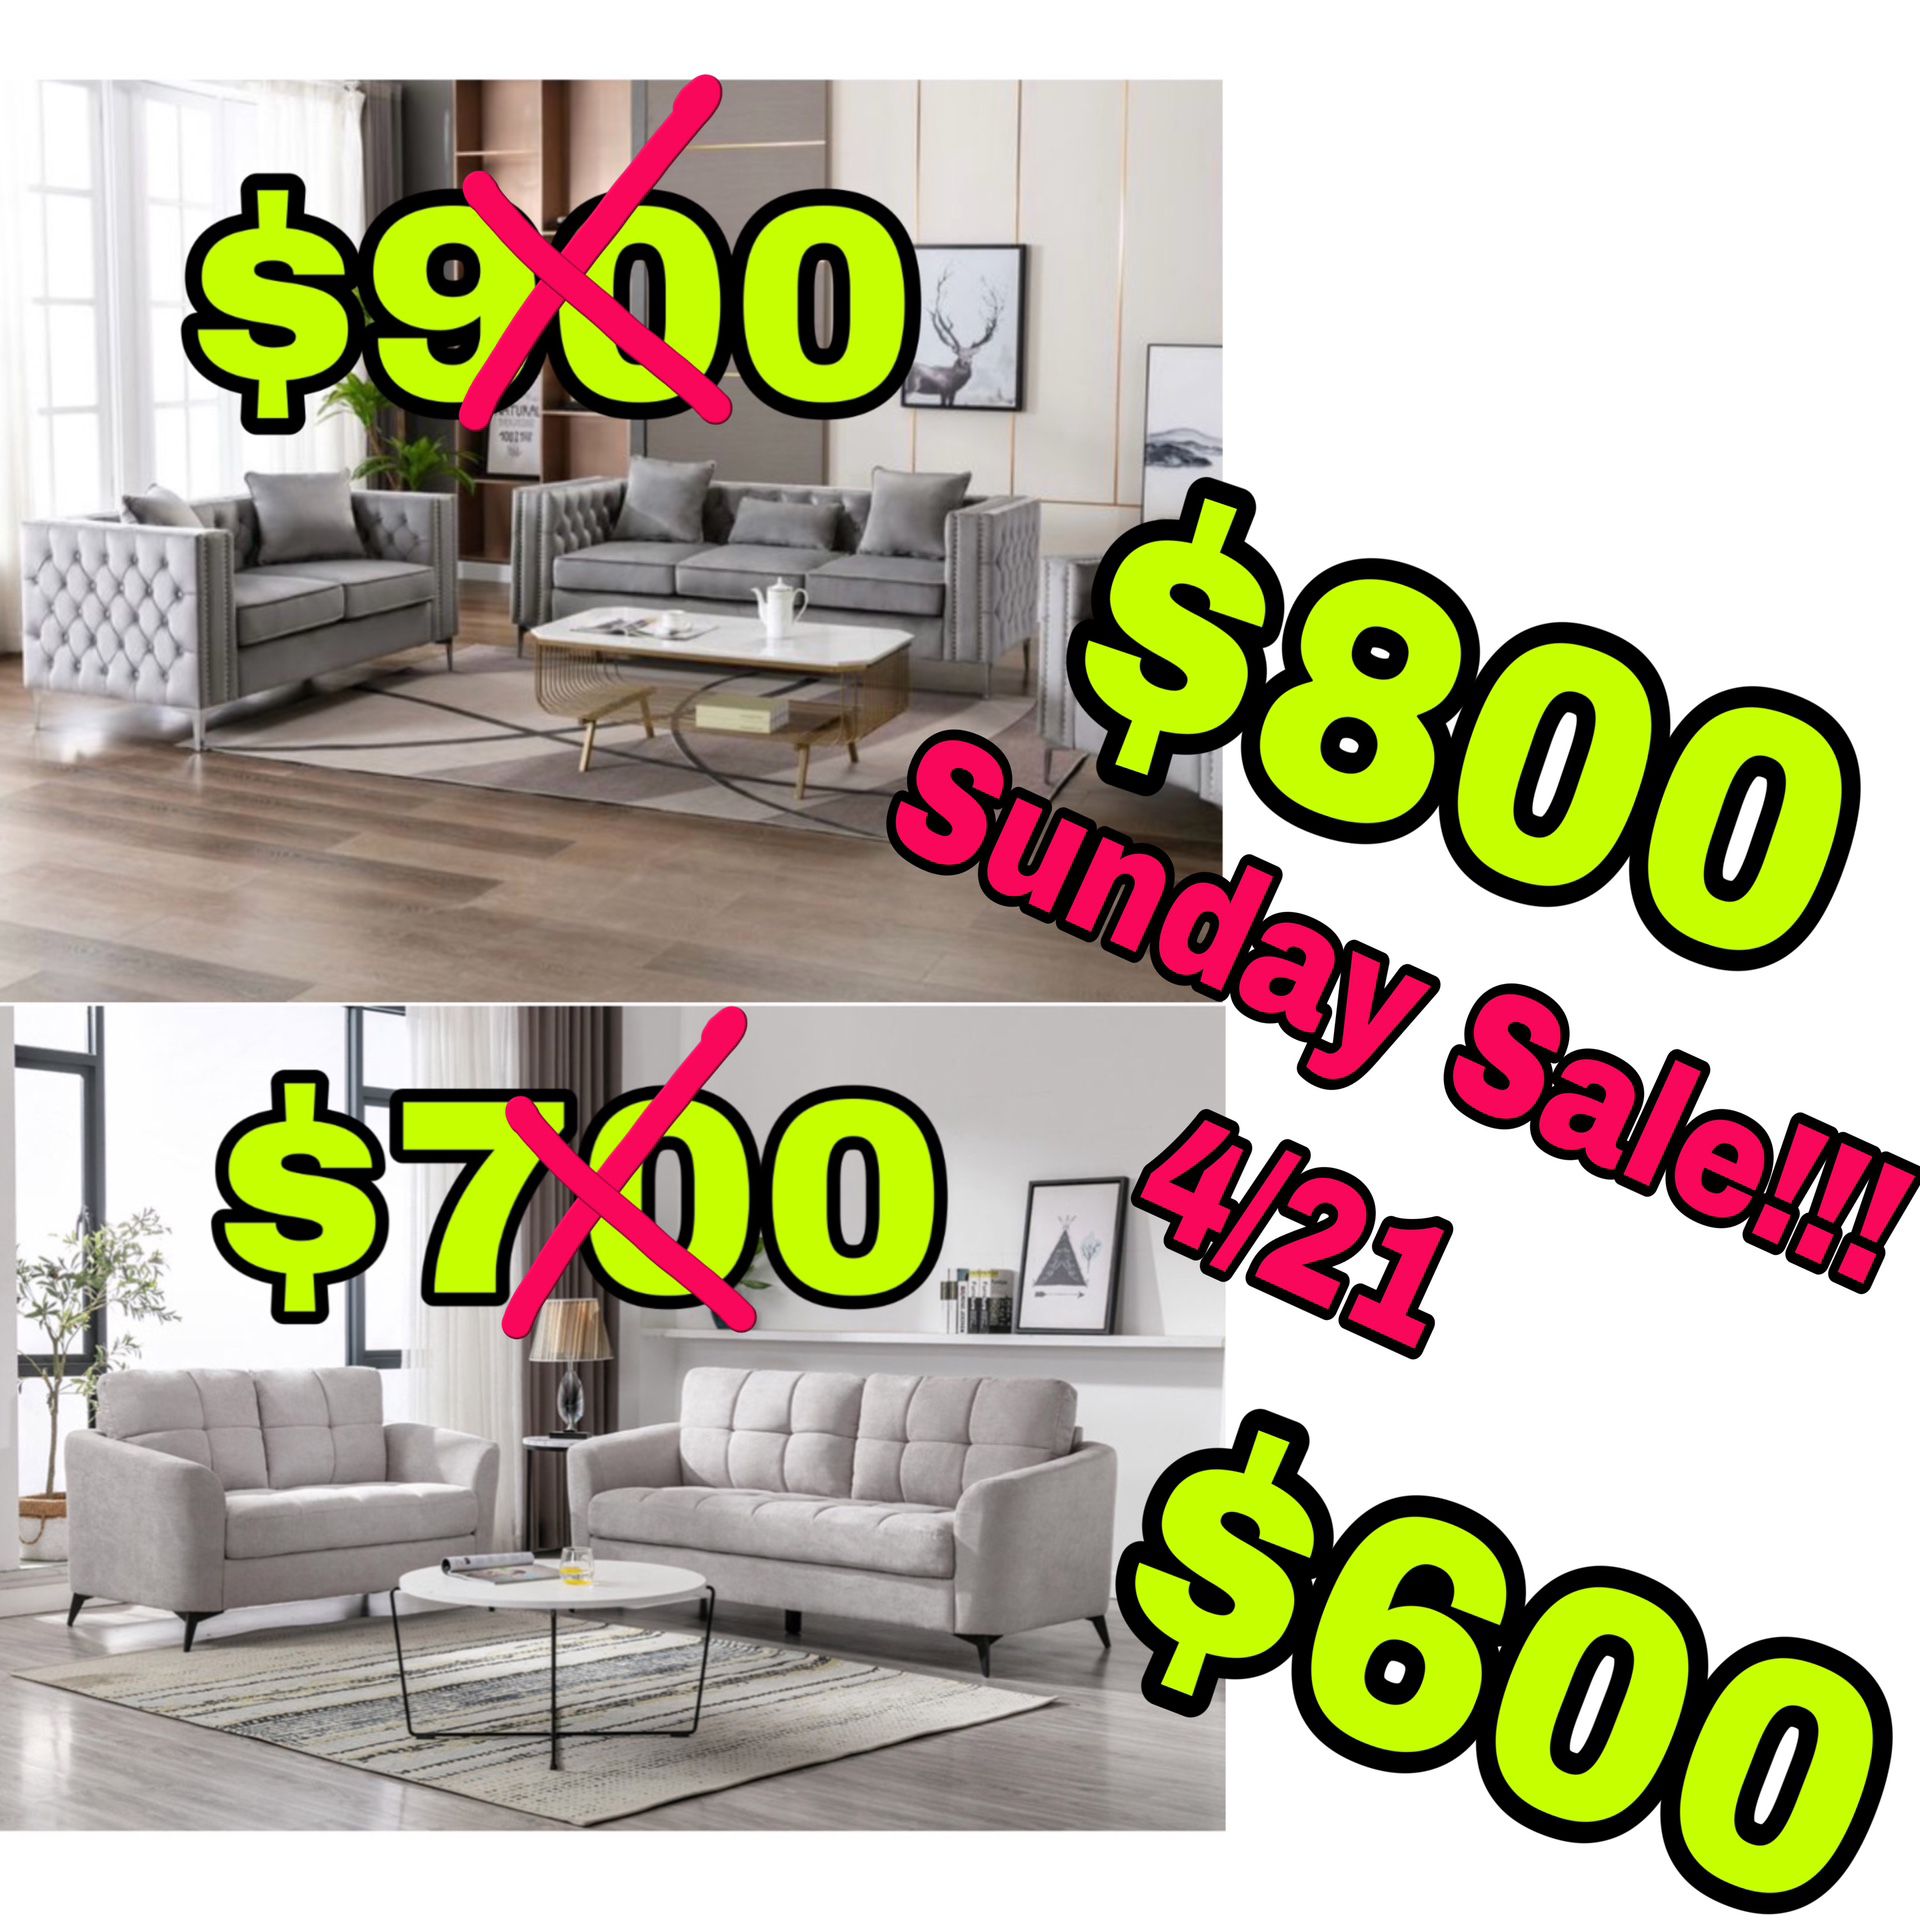 Beautiful New 2PC Sofa Sets!!! Sunday 4/21 Sale!!!